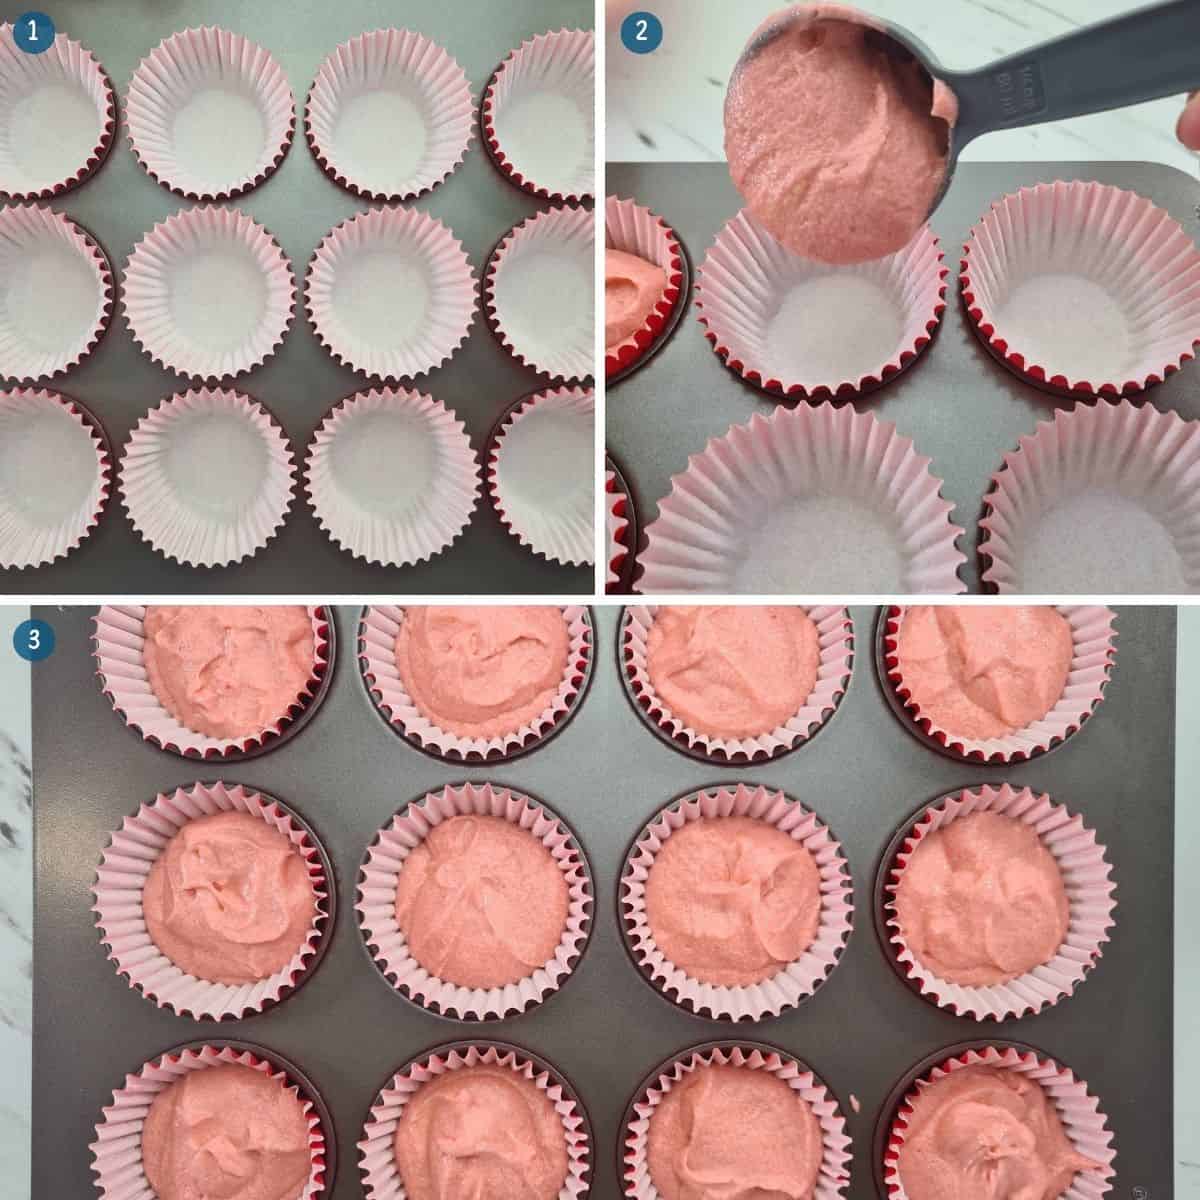 preparing-to-bake-the-rose-wine-cupcakes